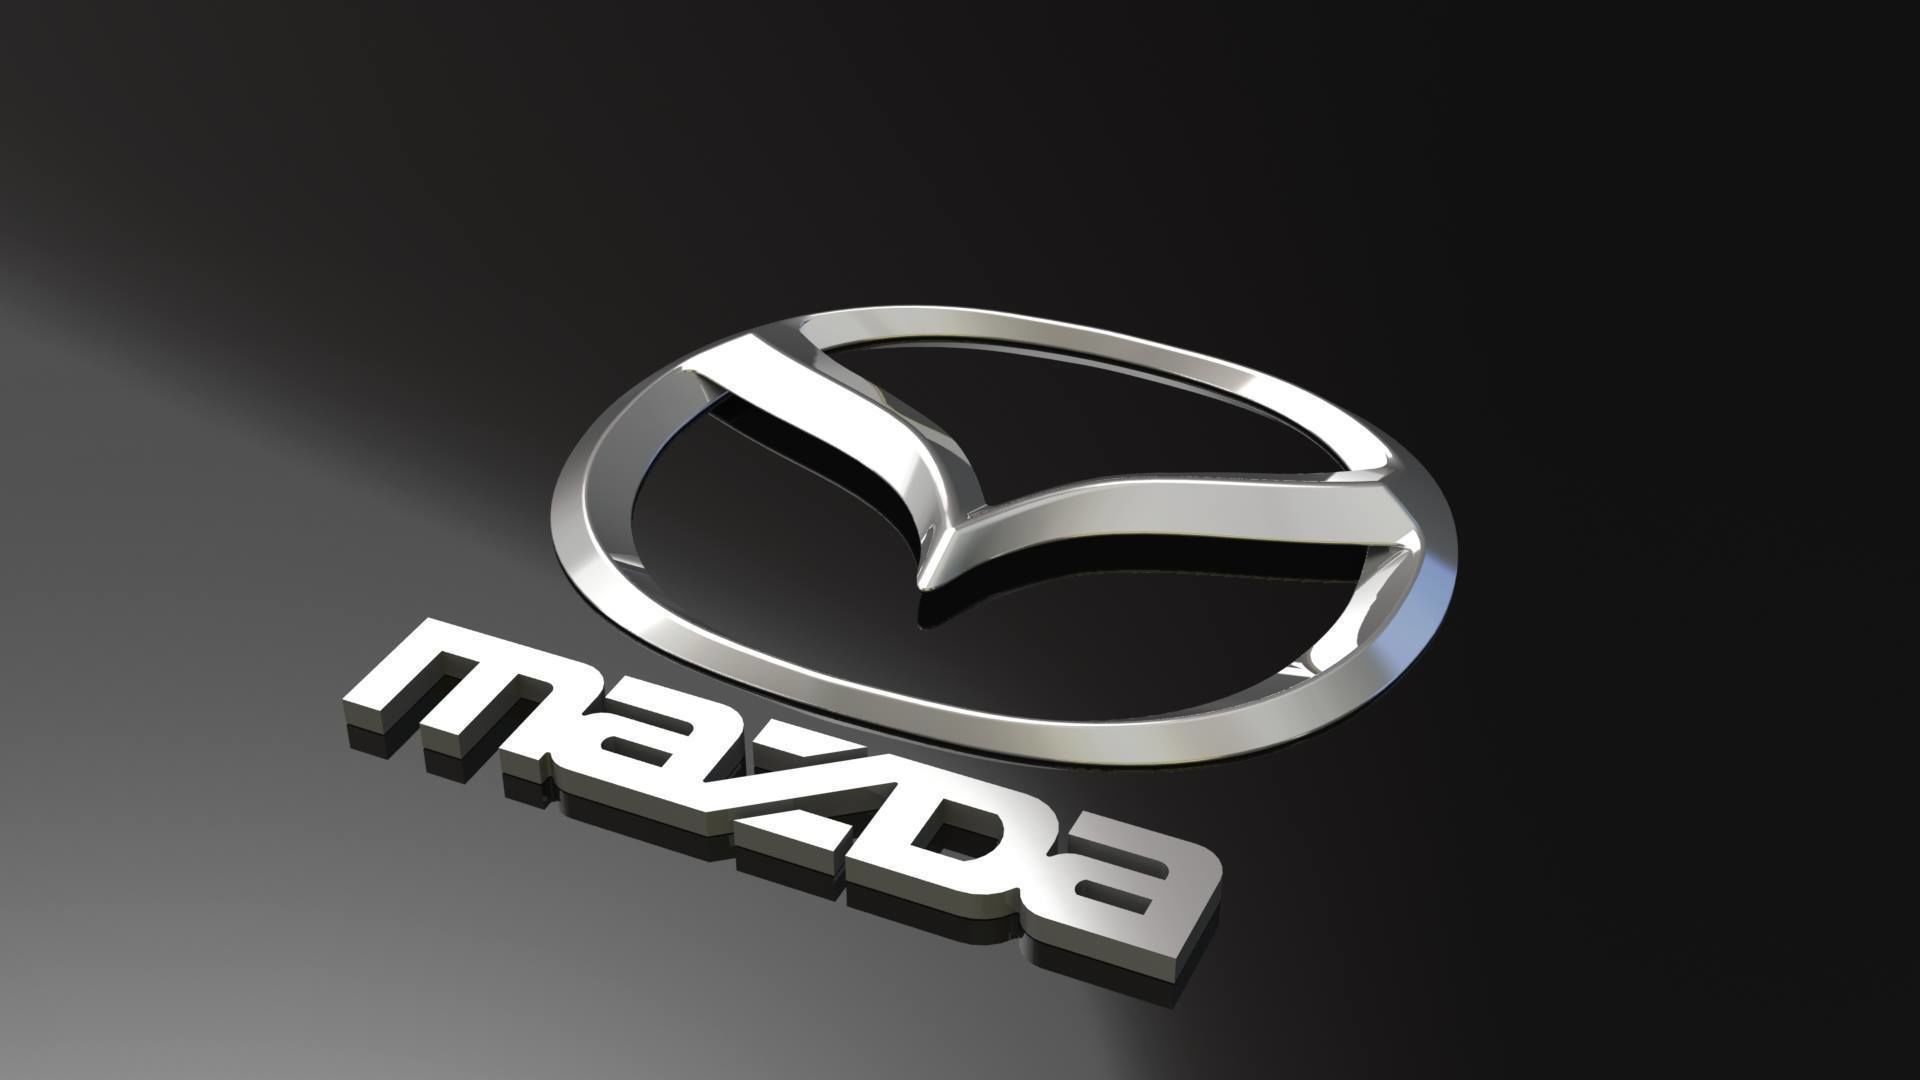 Mazda фото